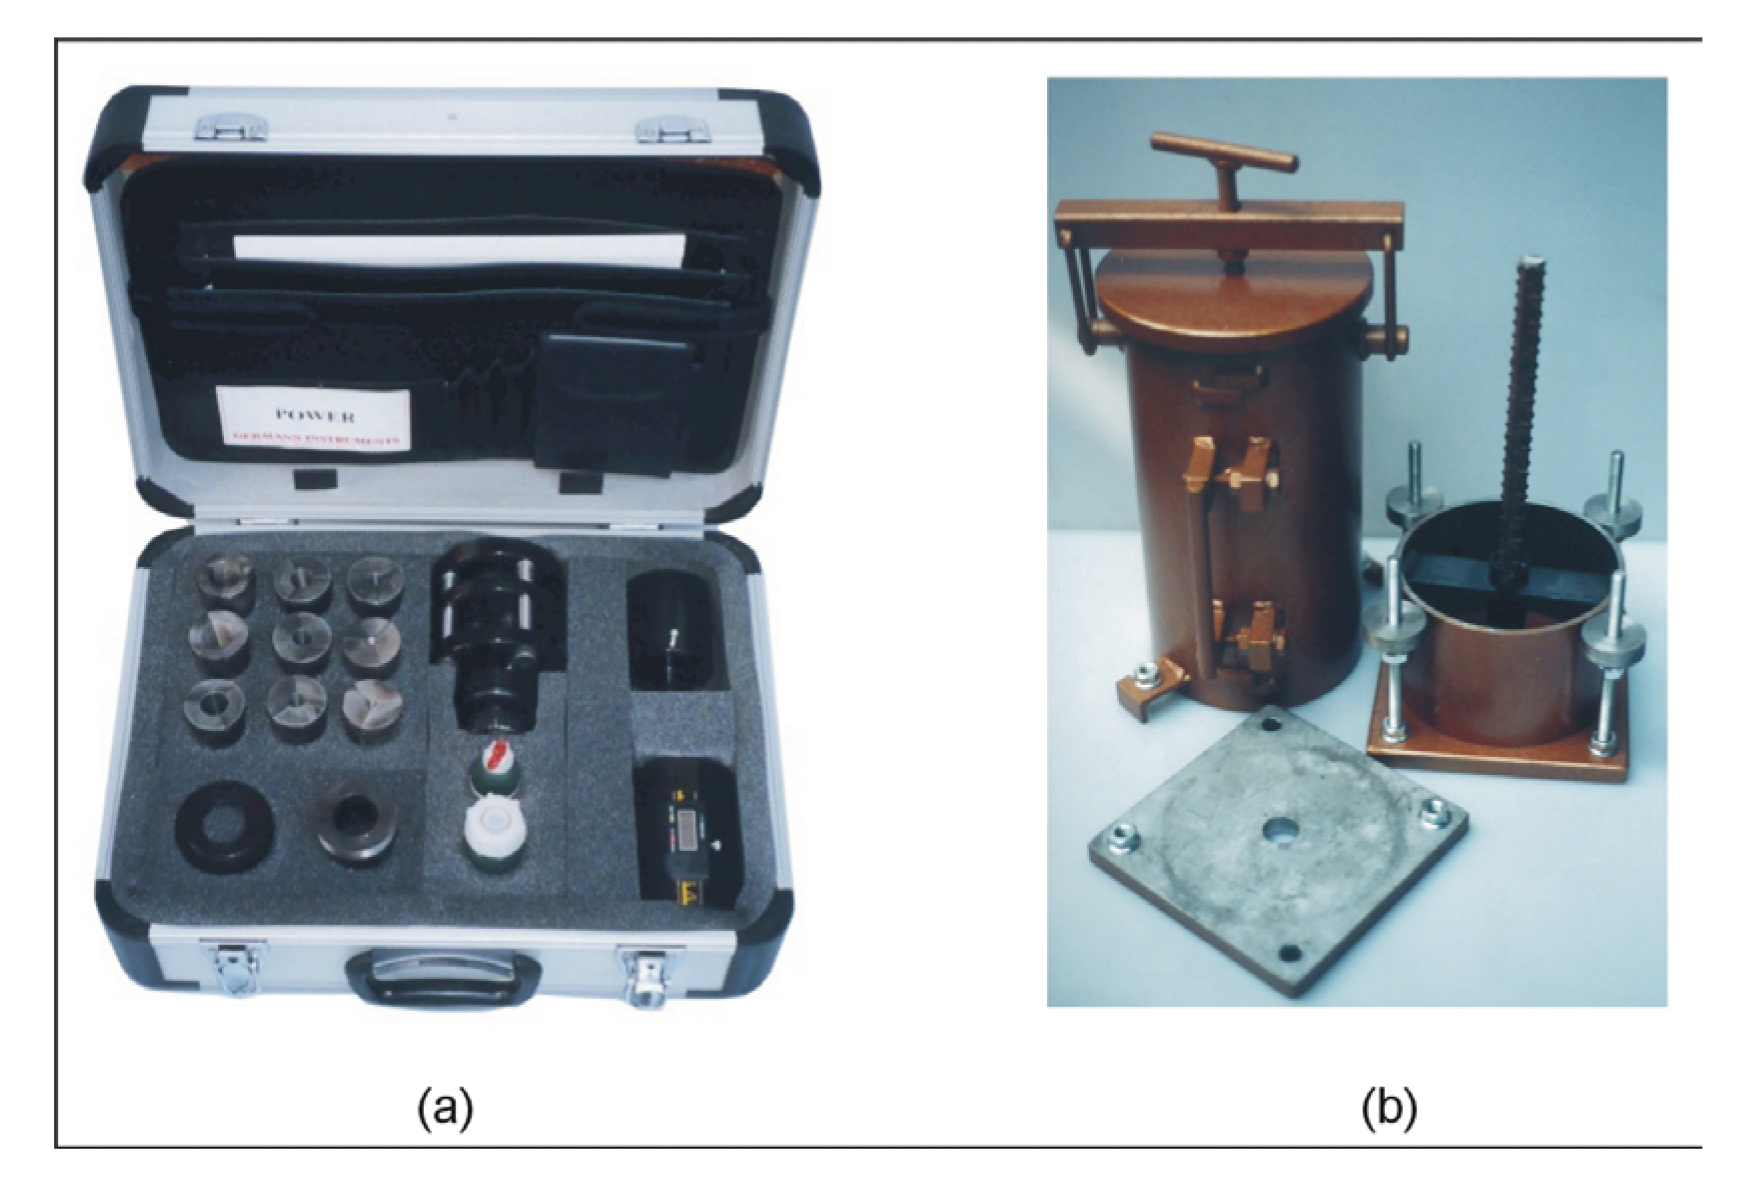 Power equipment to test rebar bonding:  (a) Preparation Kit, and (b) Power equipment. (Germann Instruments)